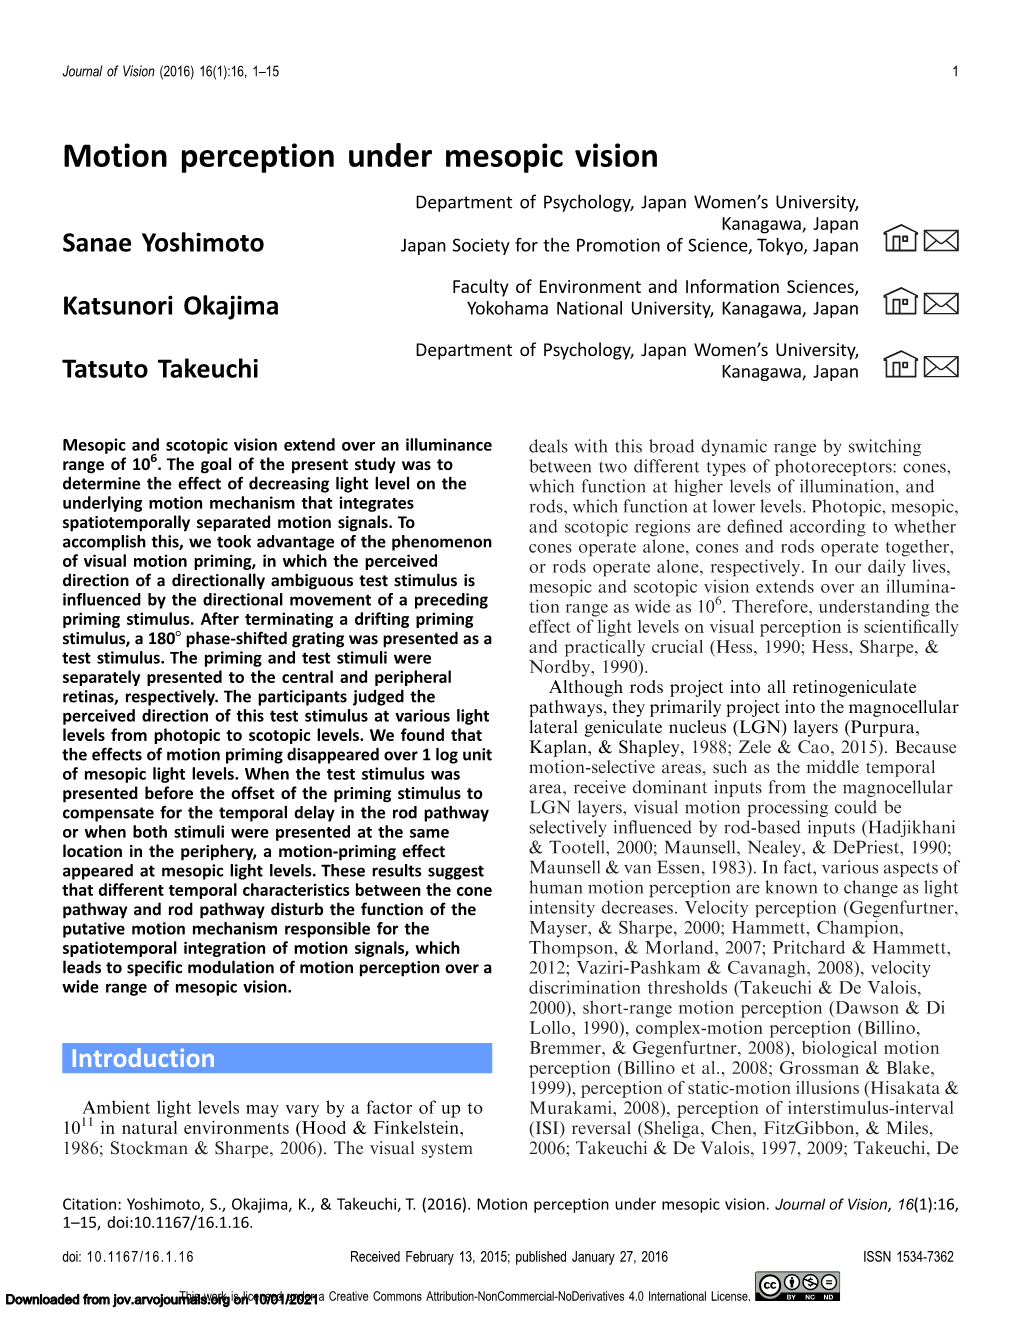 Motion Perception Under Mesopic Vision